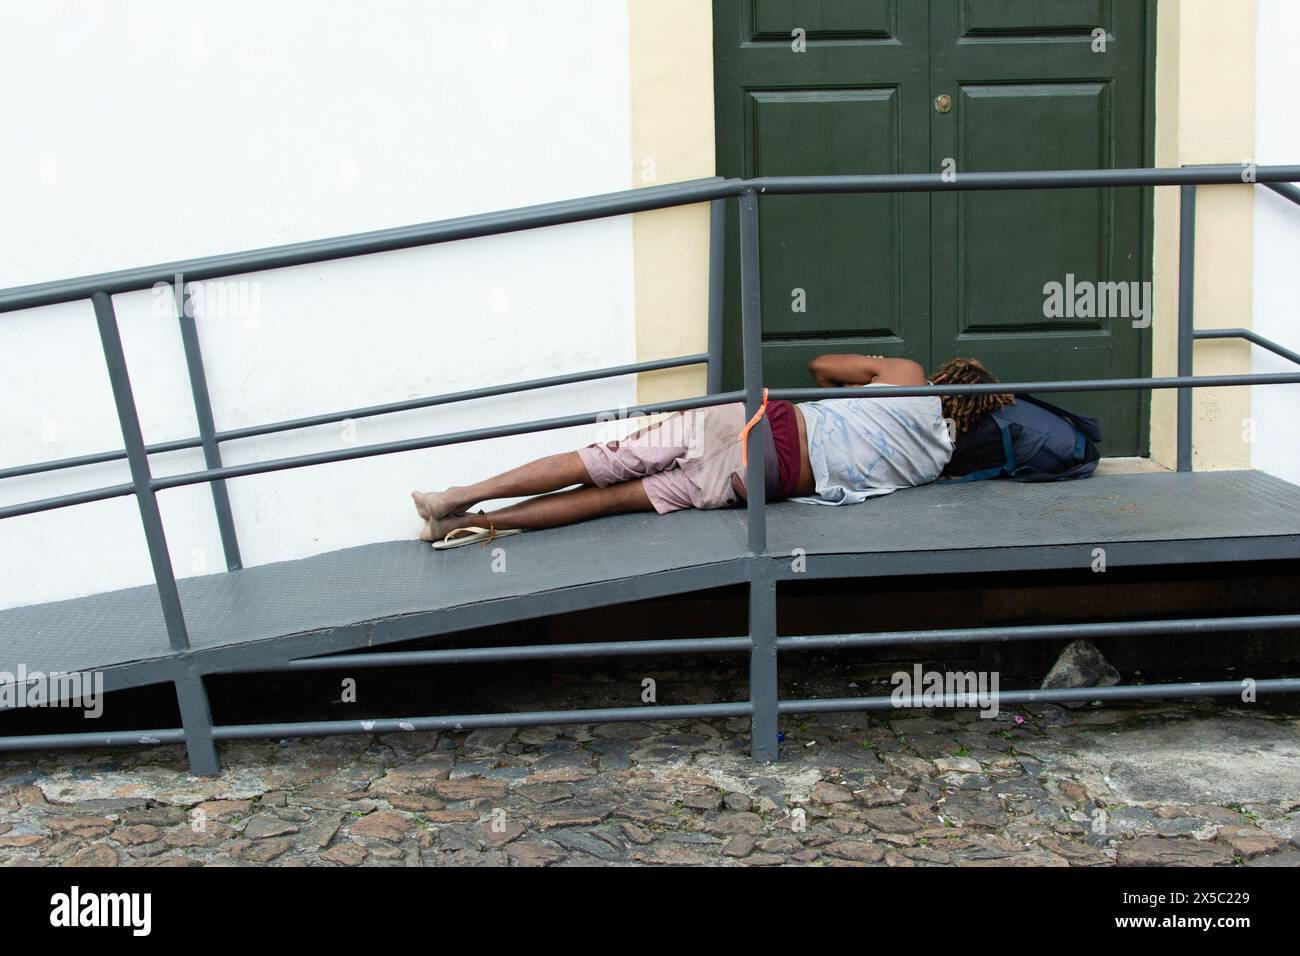 Salvador, Bahia, Brazil - July 27, 2019: Homeless man is seen sleeping on an access ramp in Pelourinho, historic center of the city of Salvador, Bahia Stock Photo